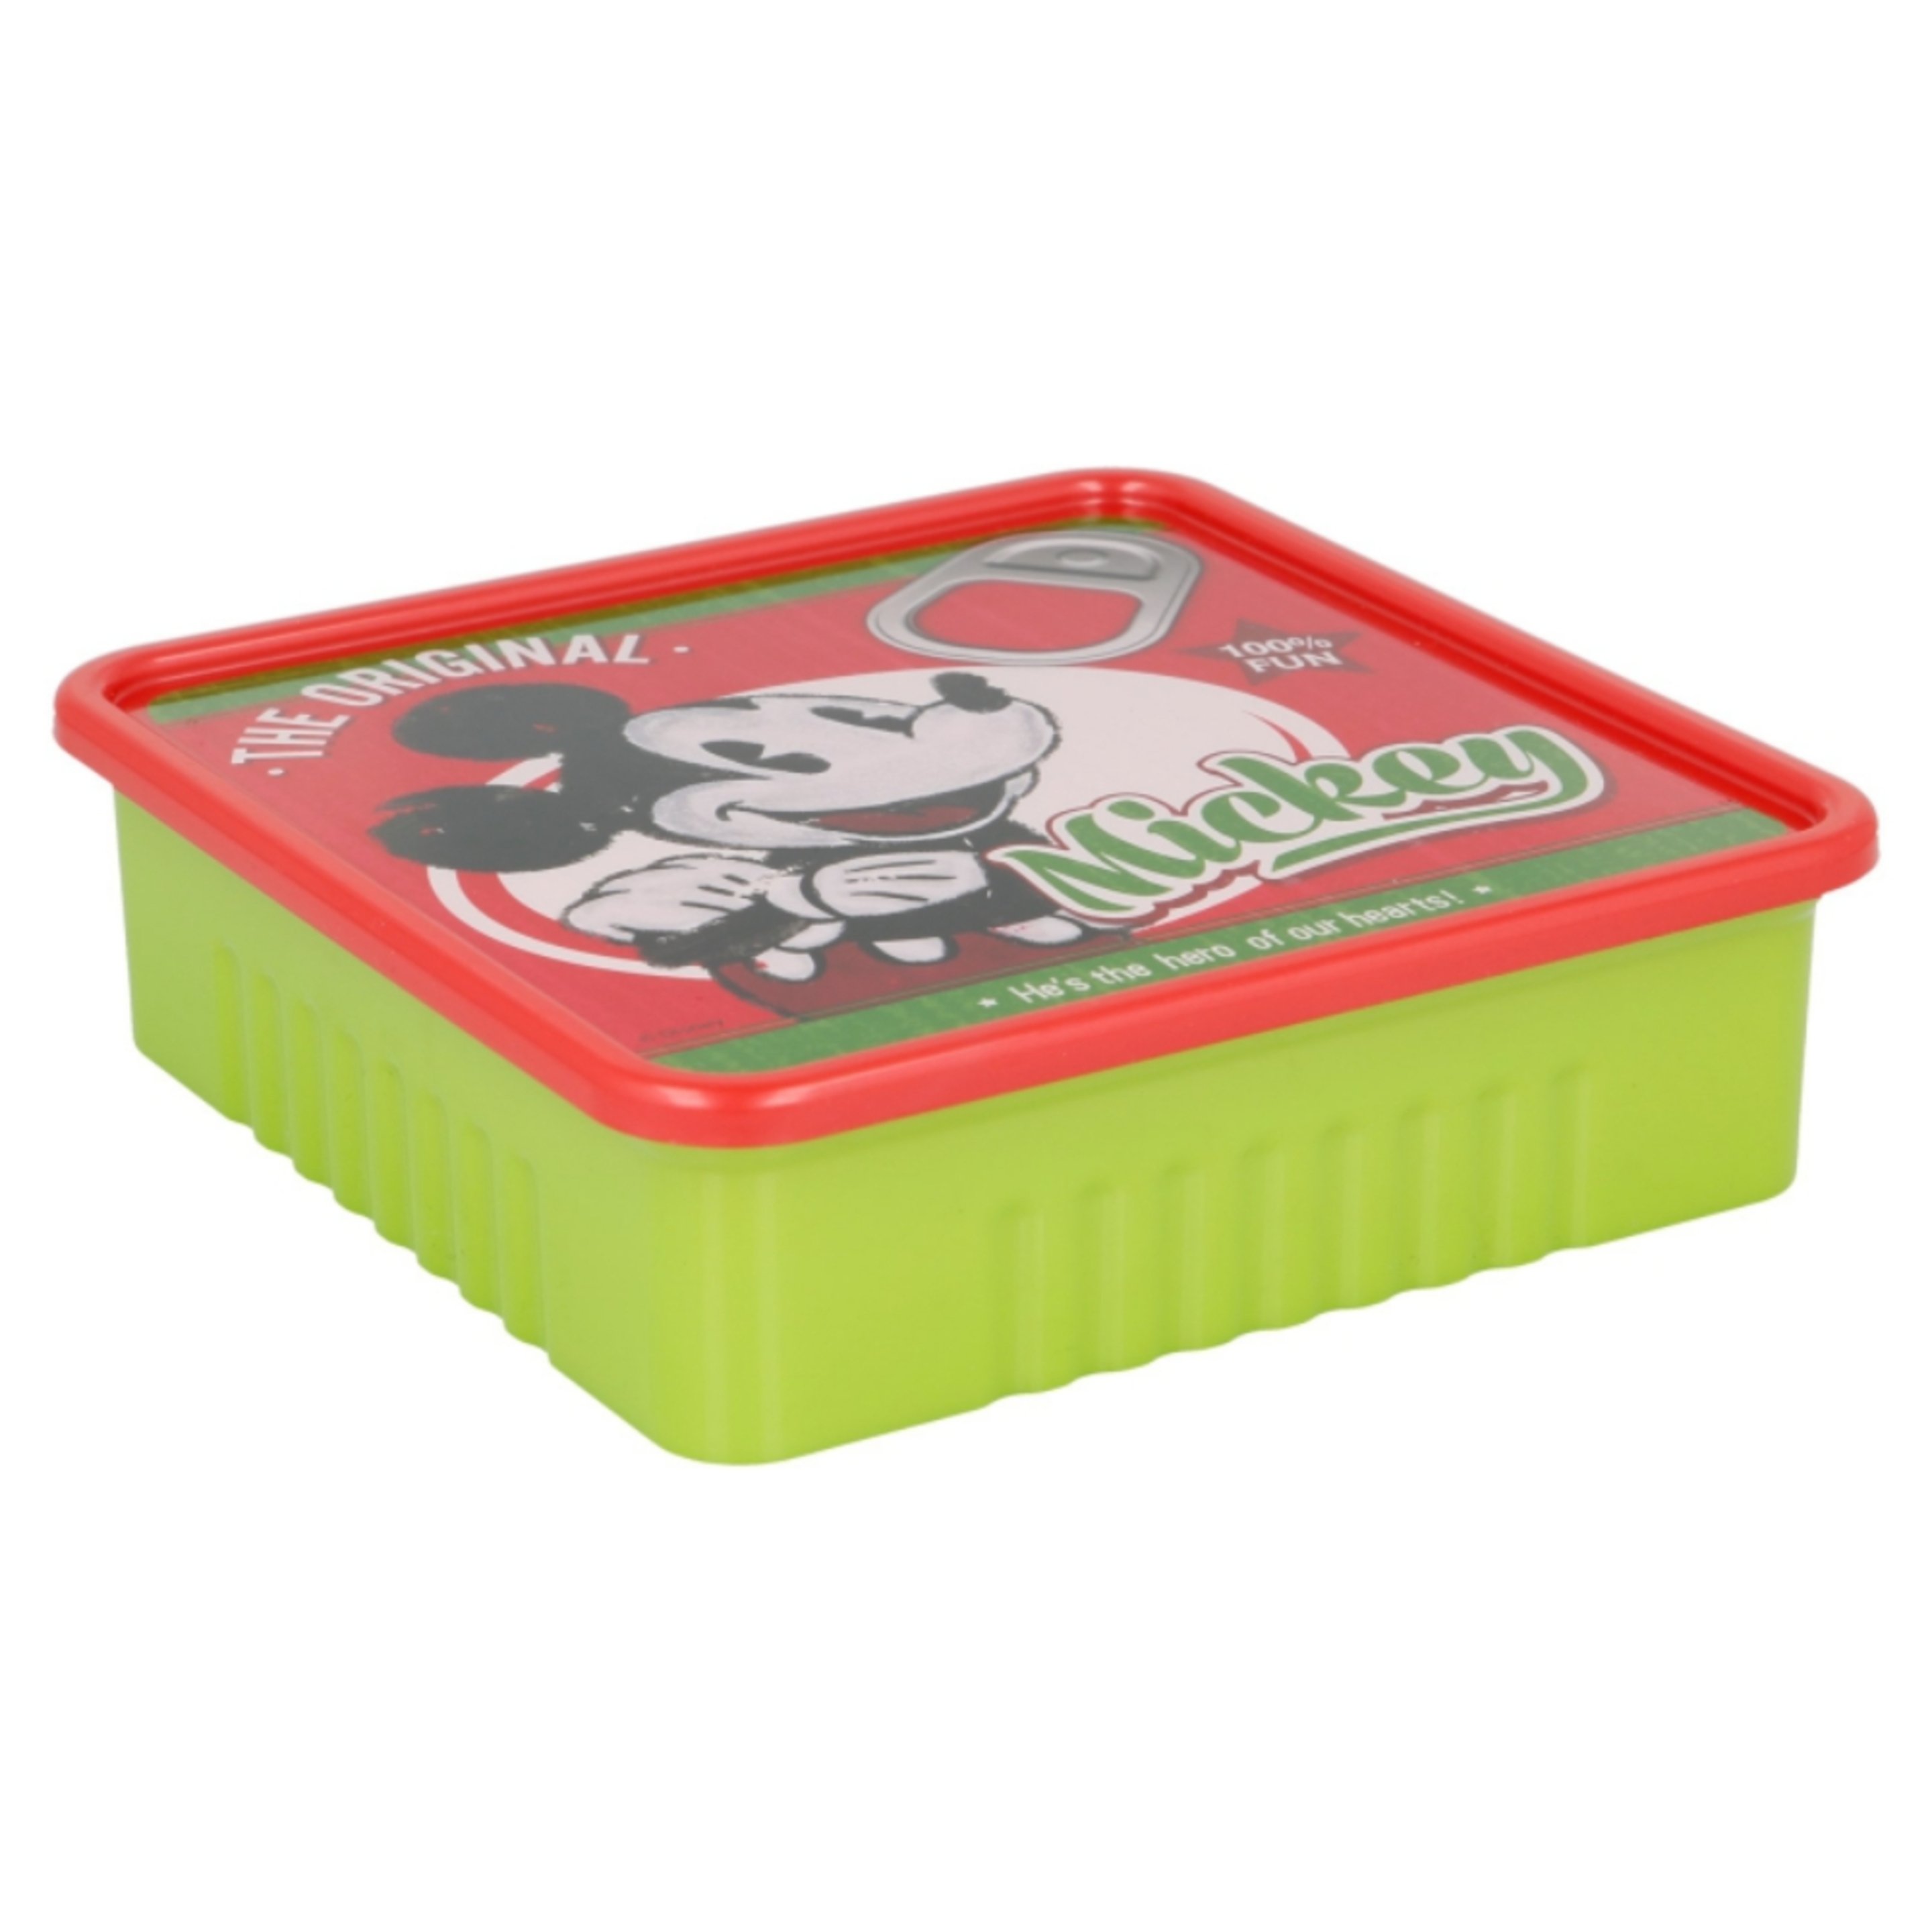 Sandwichera Mickey Mouse 62189 - verde - 